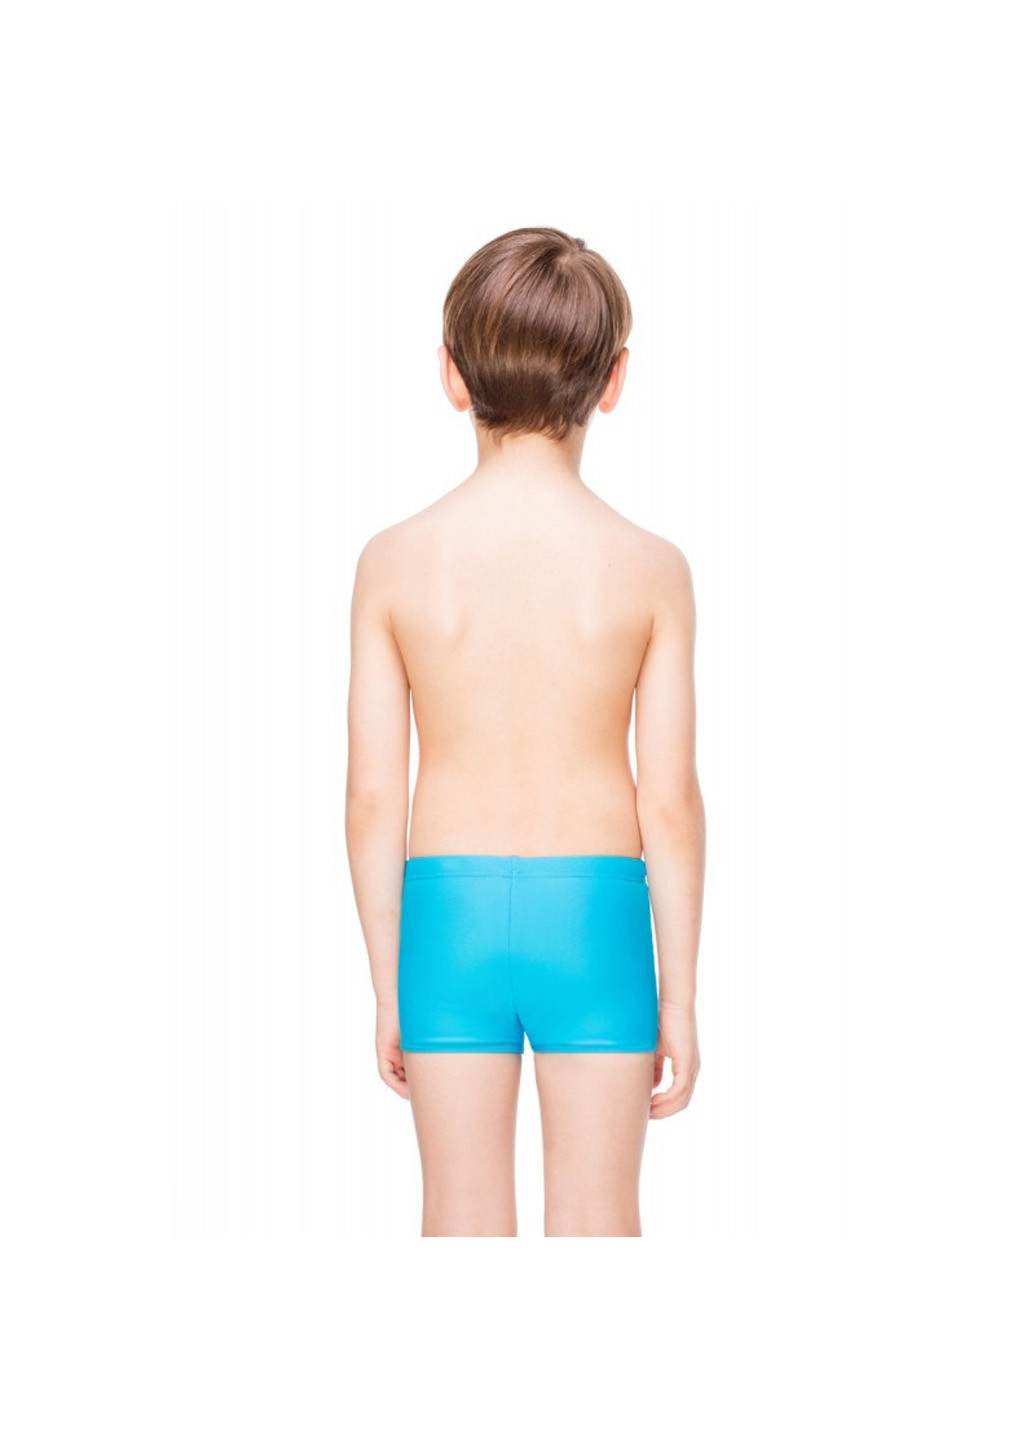 Дитячі плавки для хлопчика 122 см Aqua Speed (196558235)